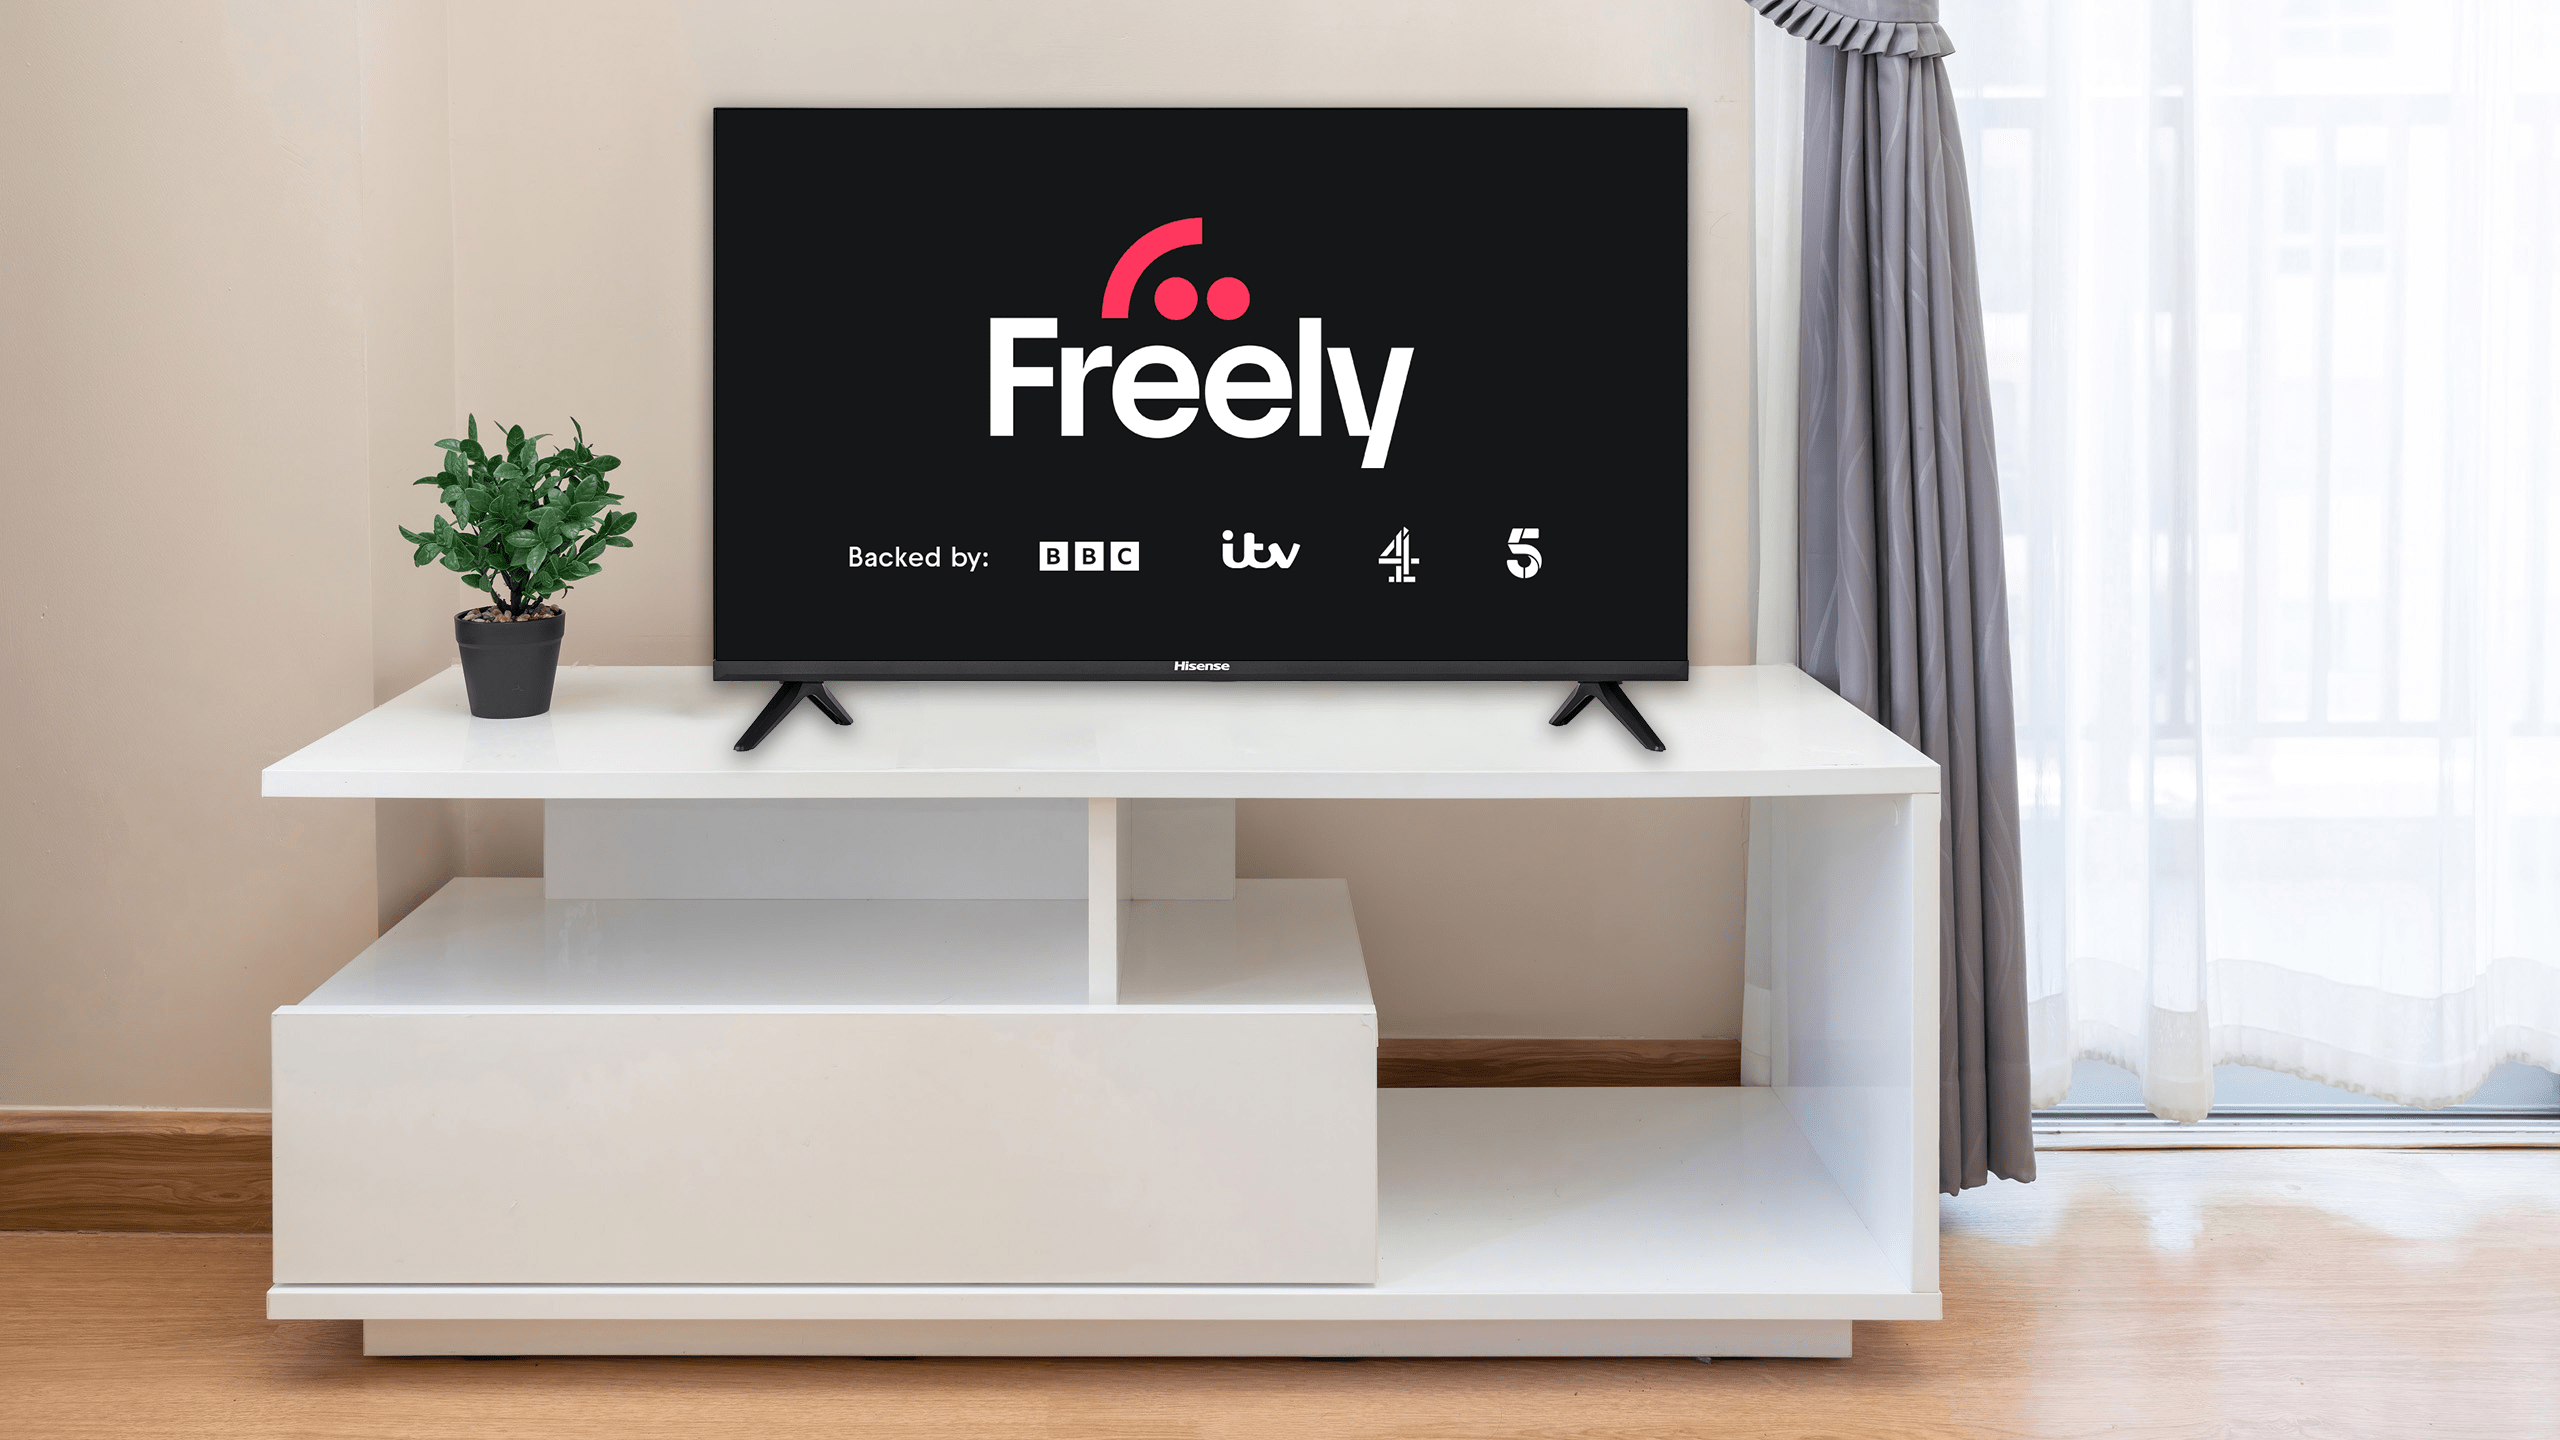 Freely logo displayed on a Hisense TV